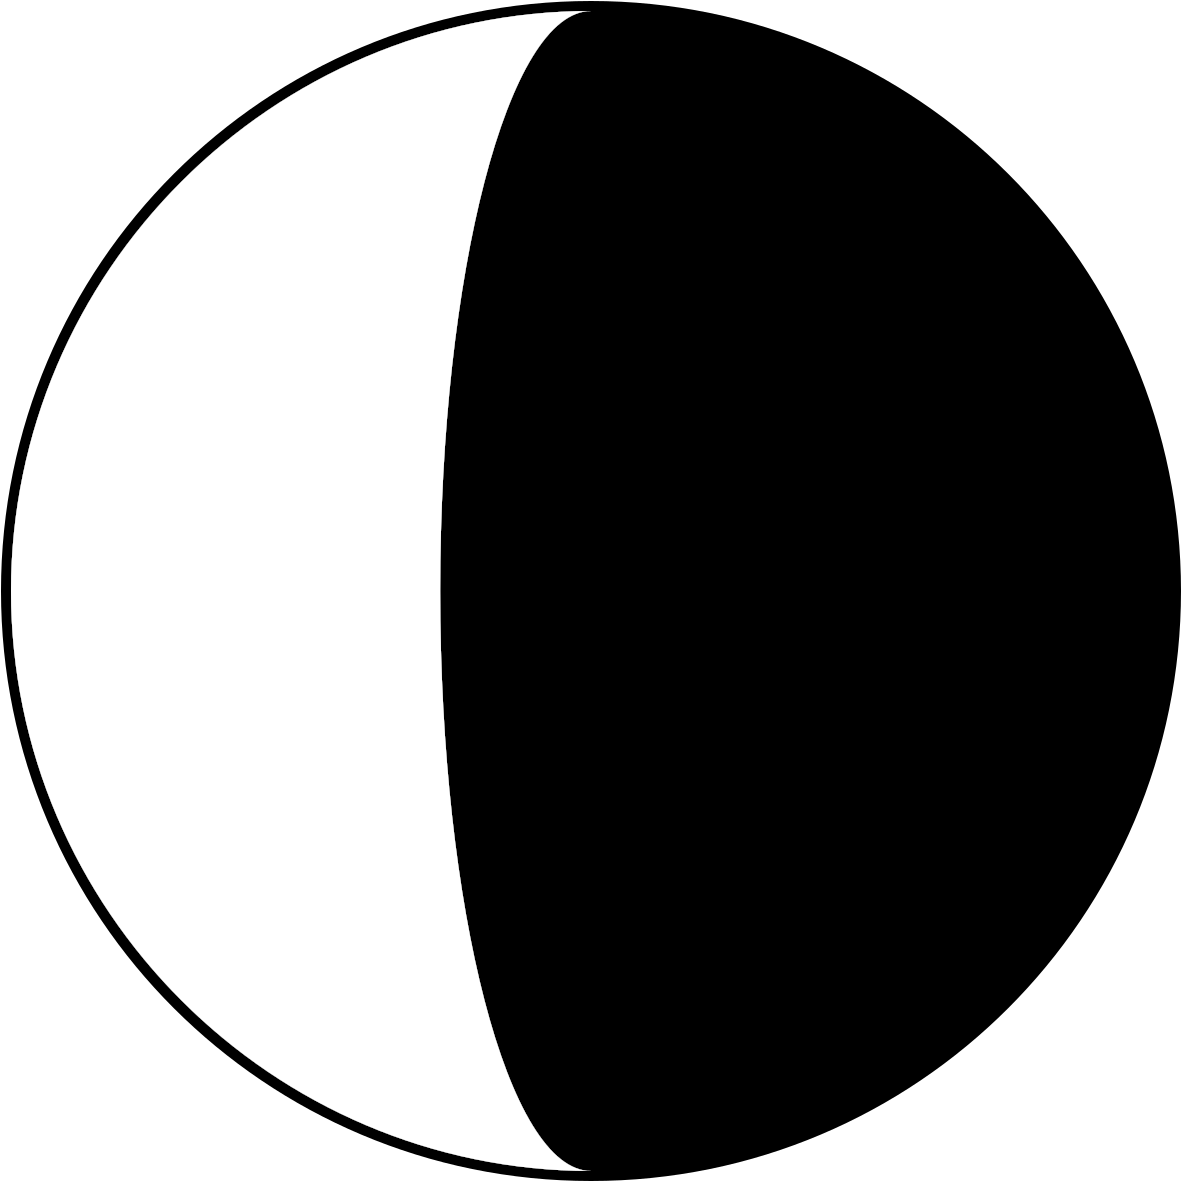 Abstract Blackand White Circle PNG image